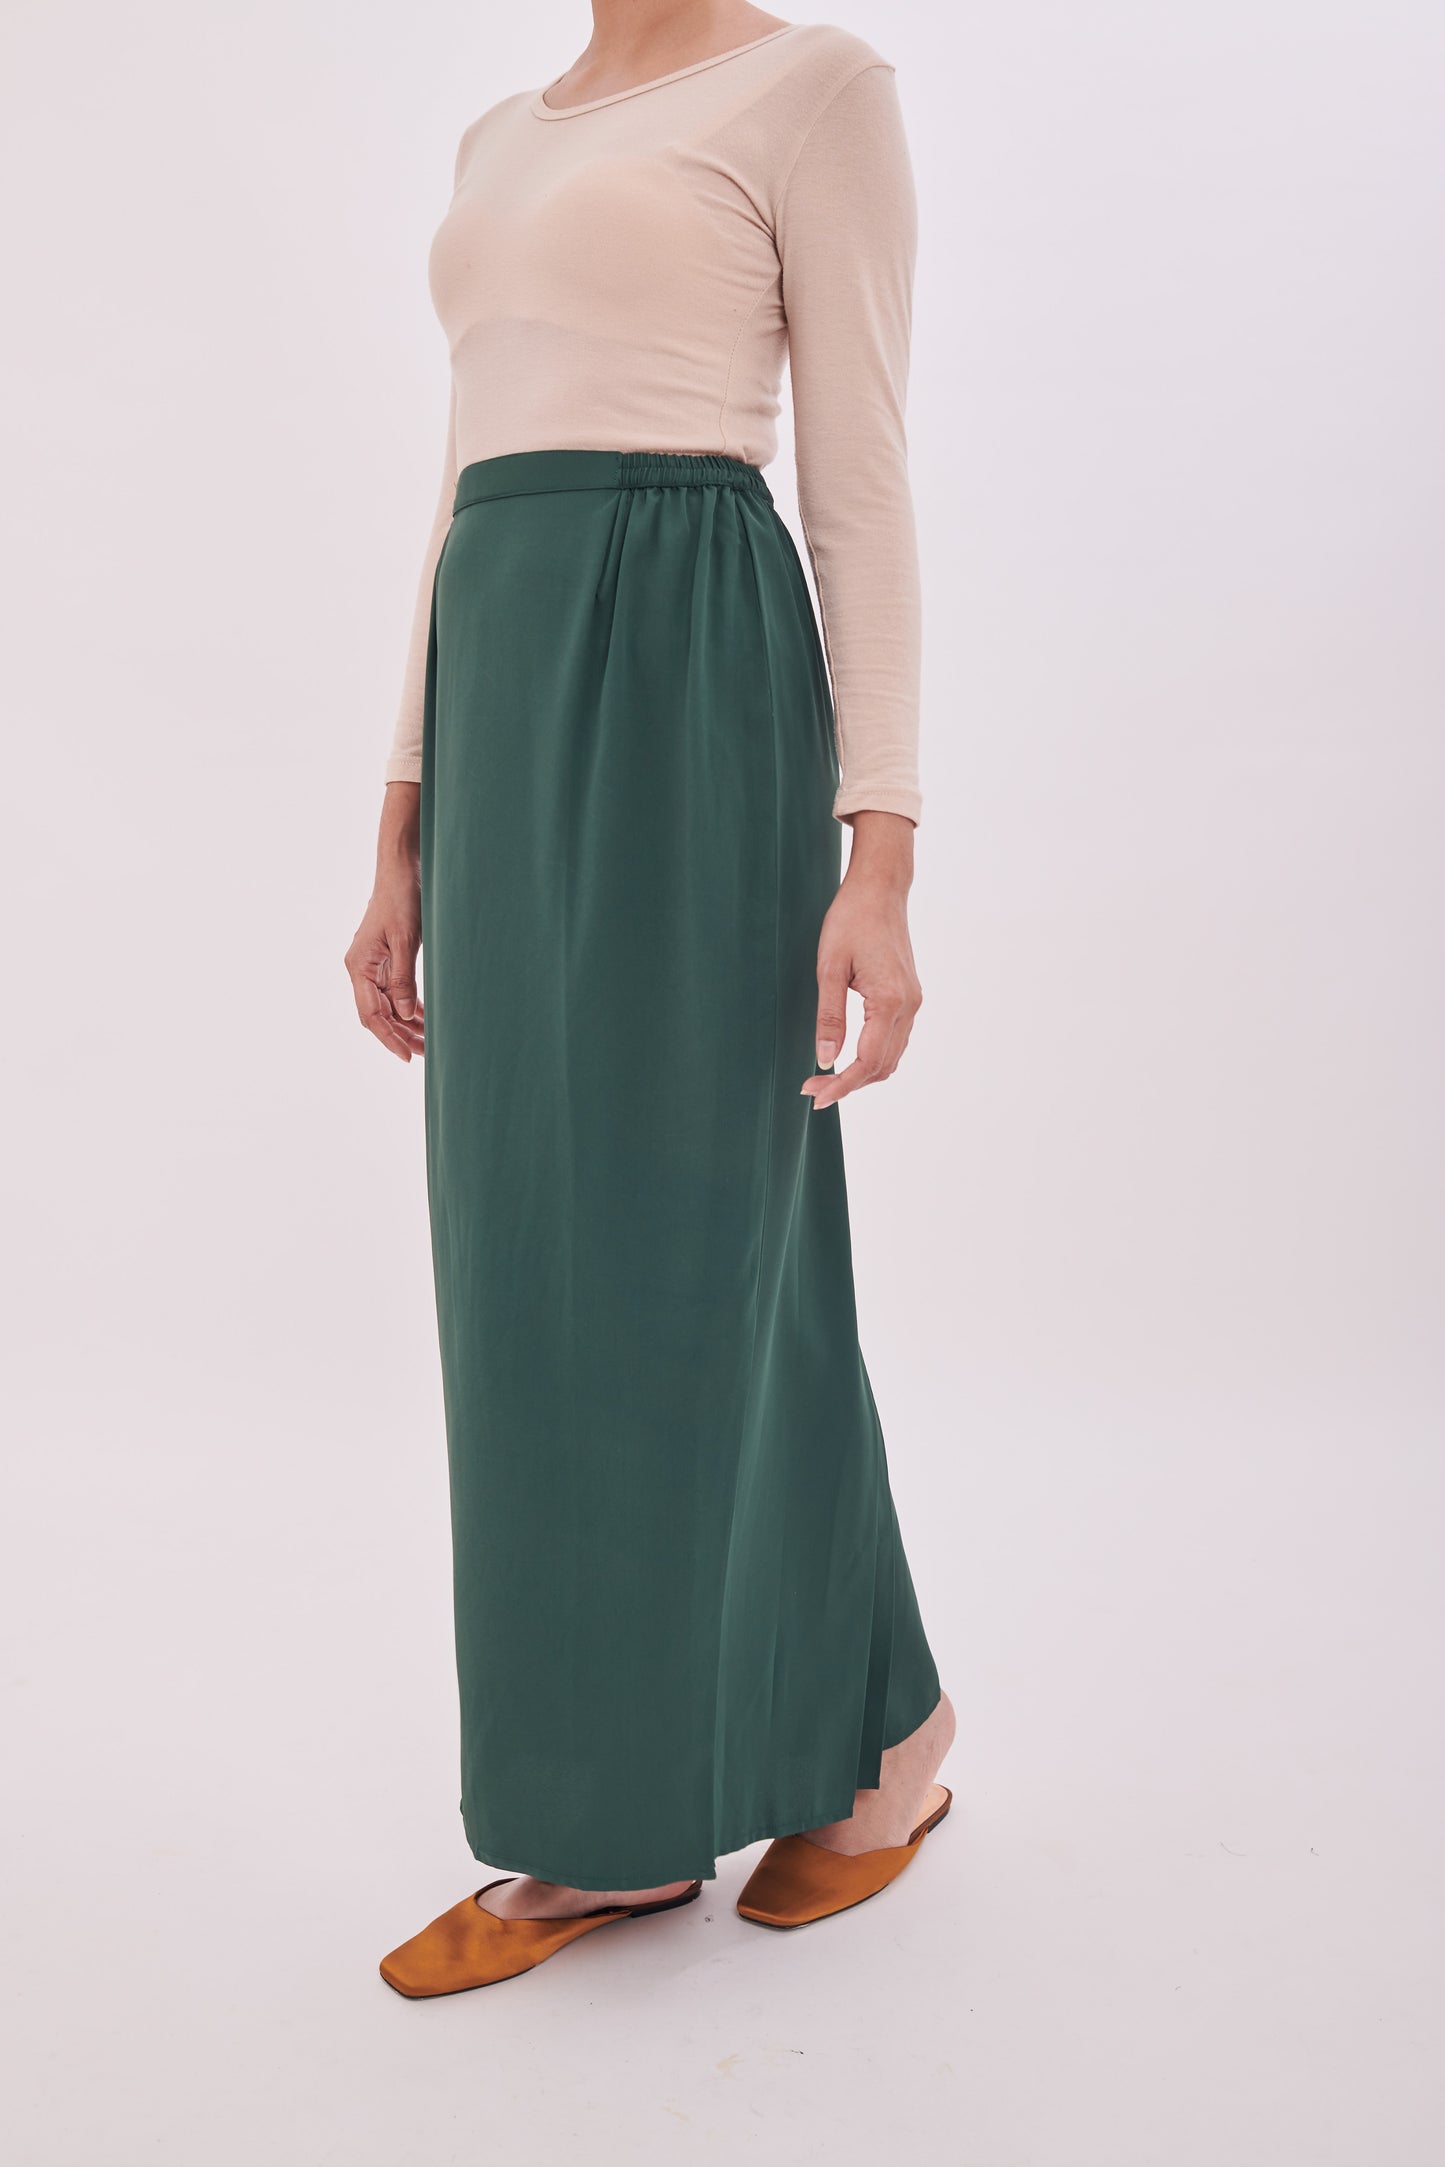 Edza Skirt in Green